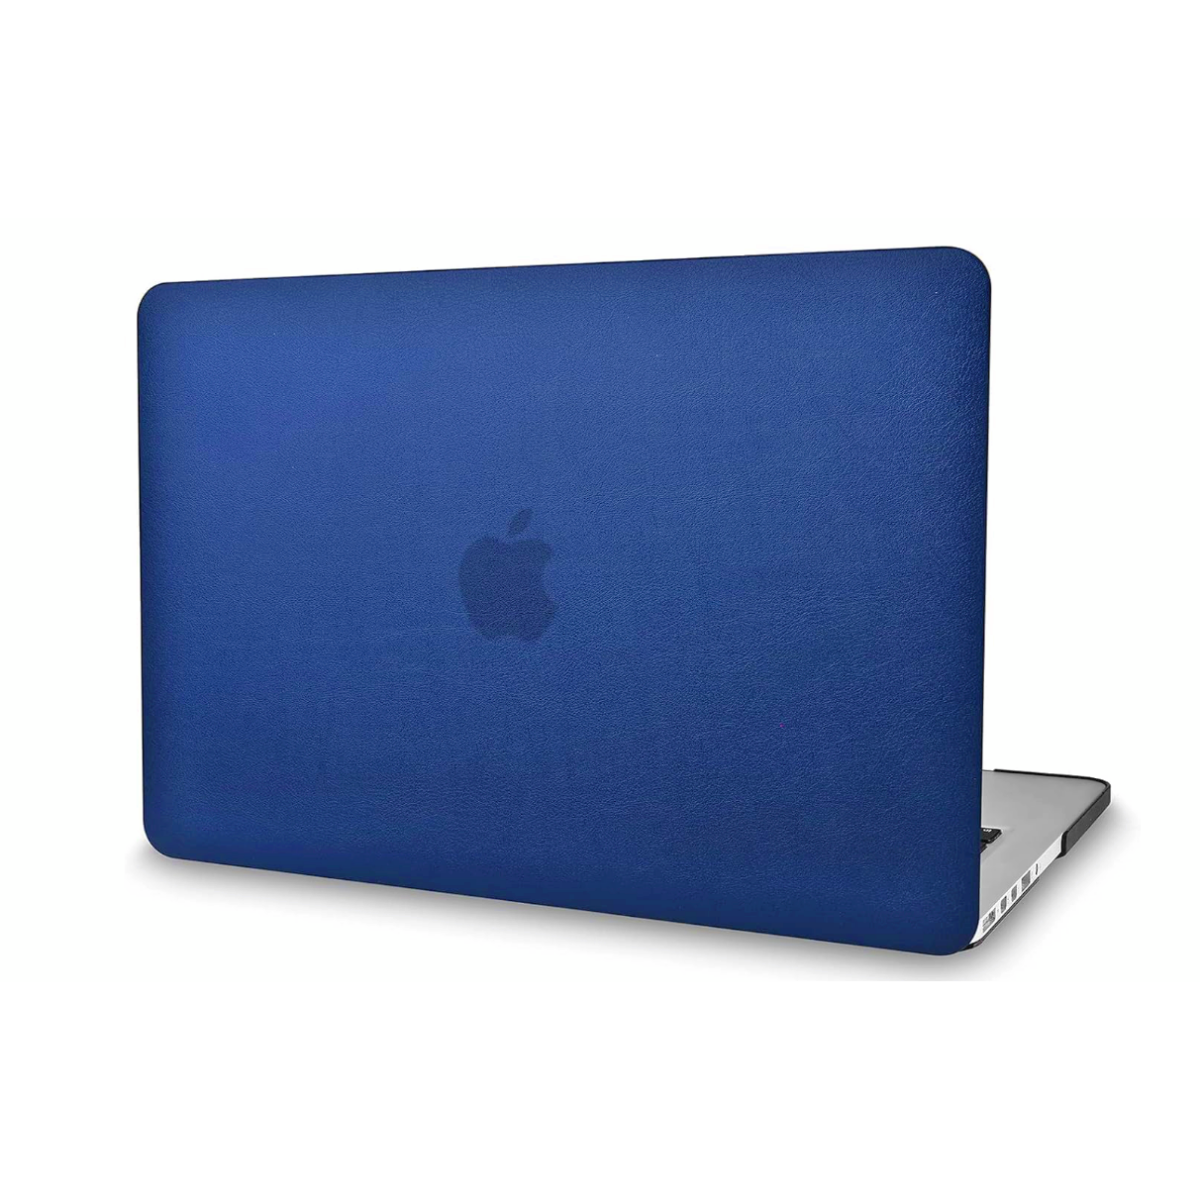 A navy-blue KECC Hard-Shell MacBook Case